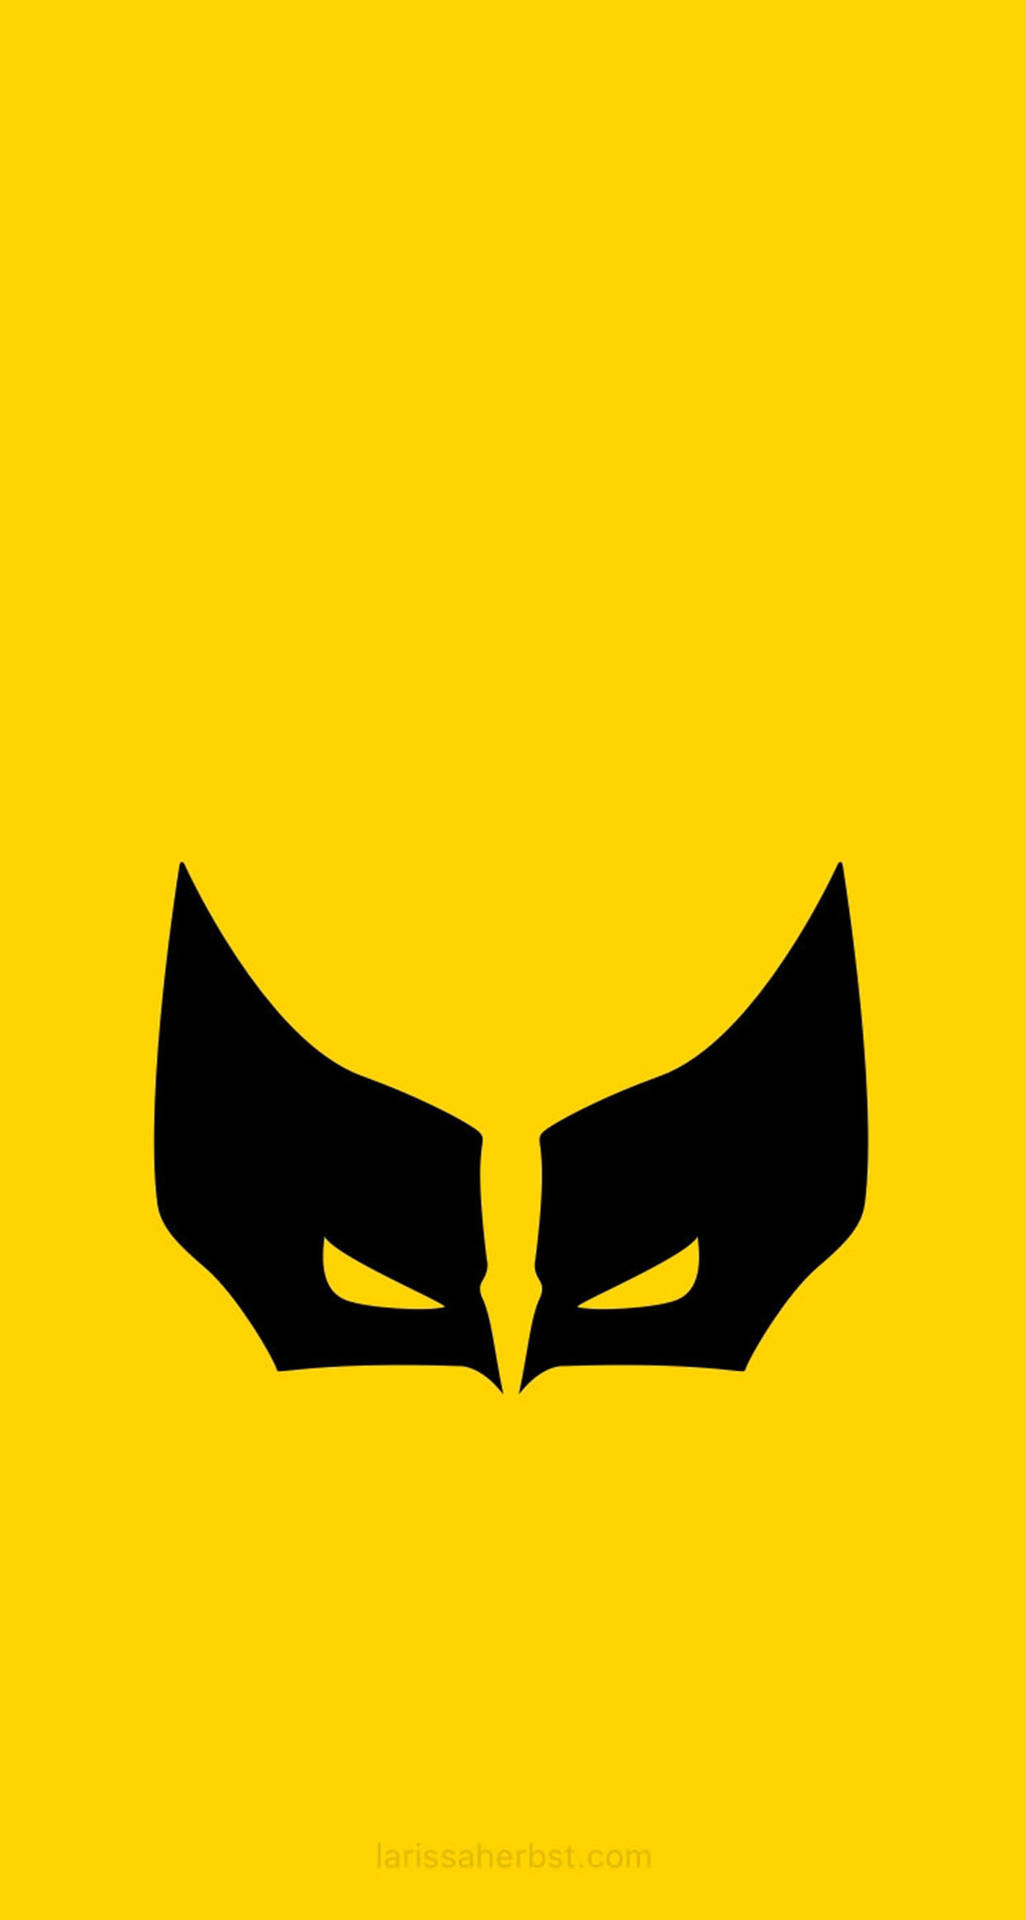 Wolverine Minimalist Android Background